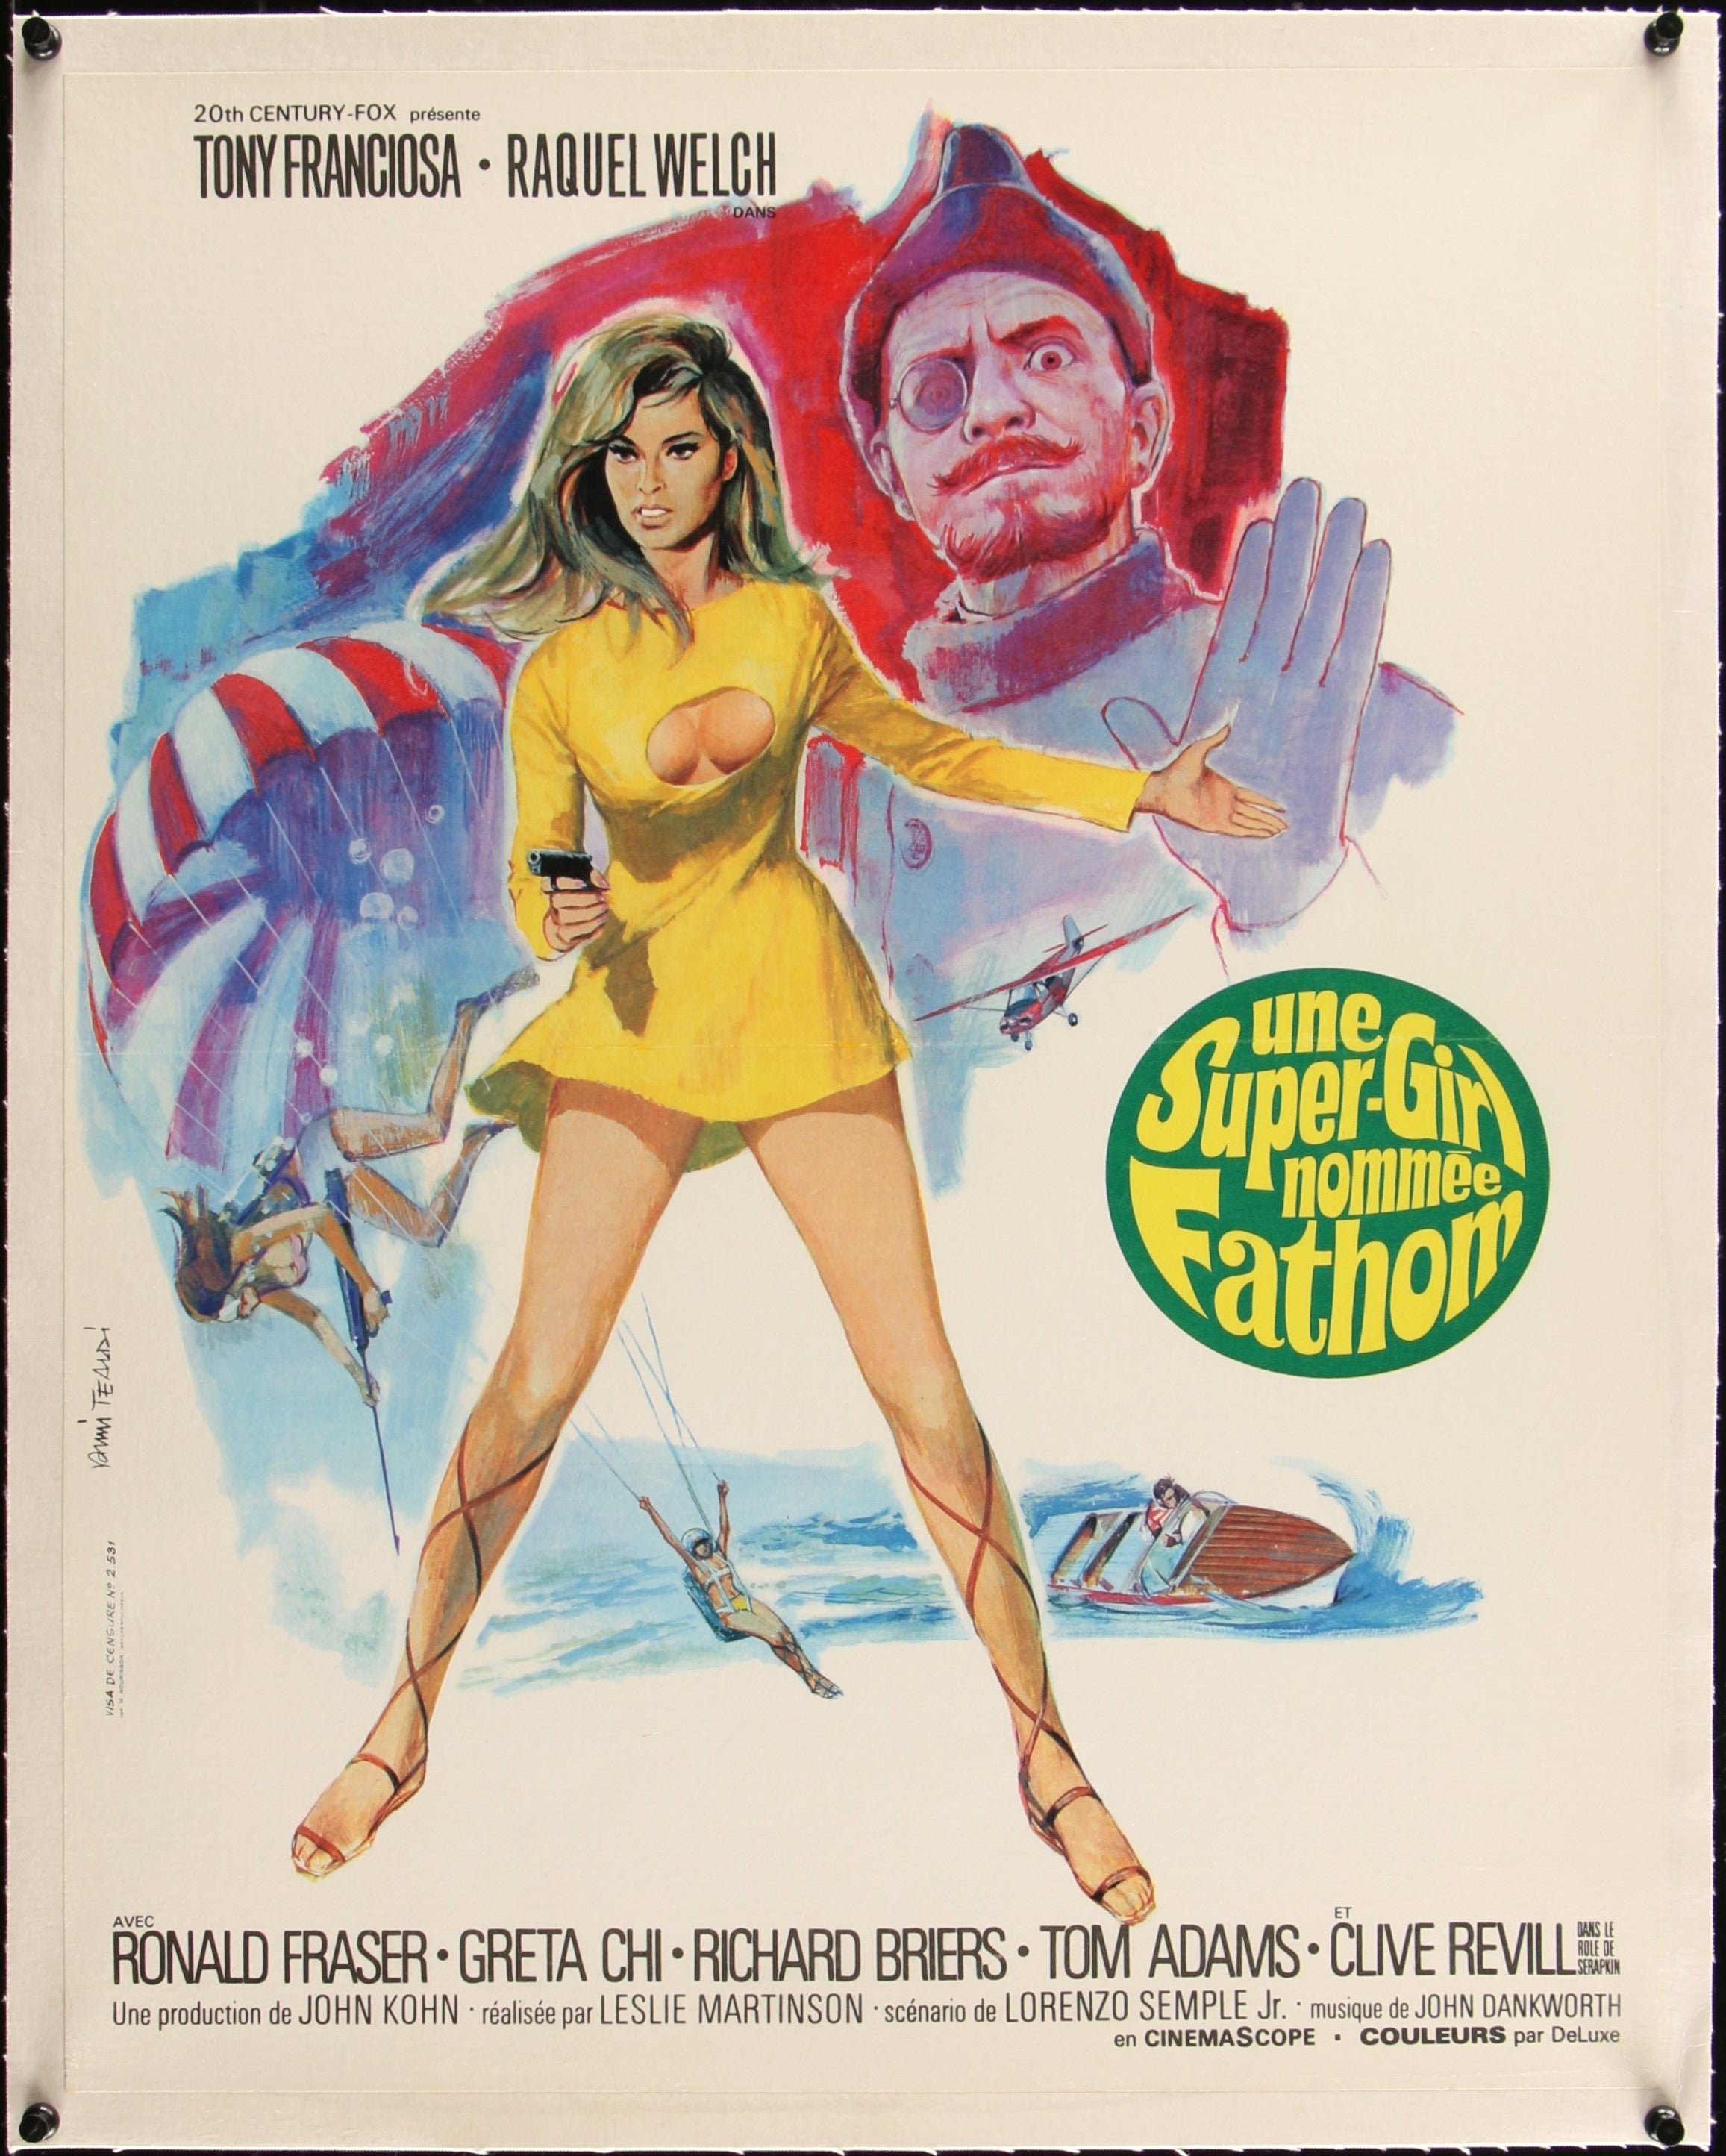 FATHOM (1967)